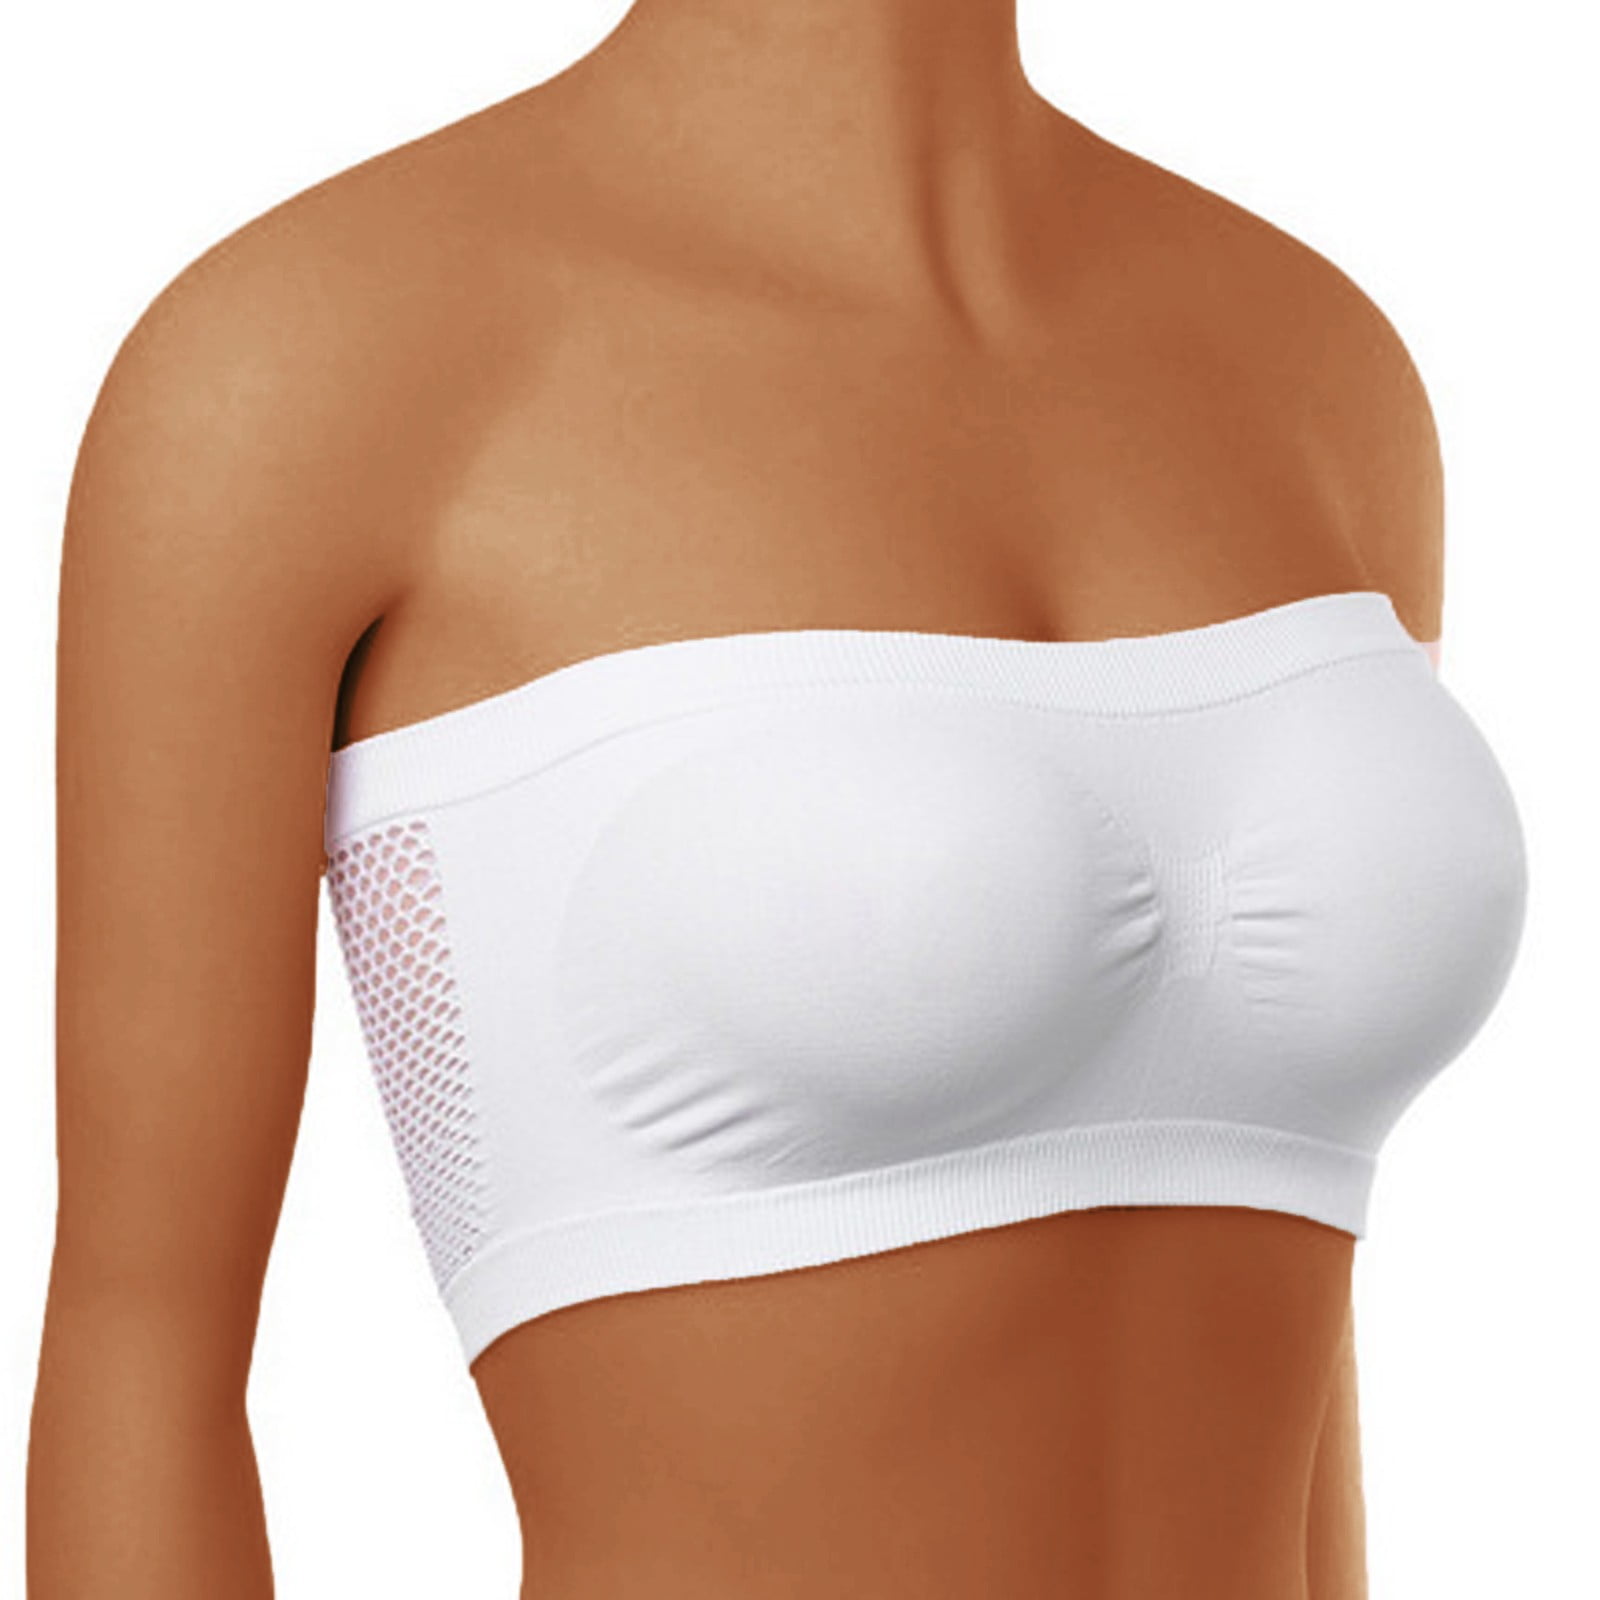 Qcmgmg Strapless Bras for Women Push Up Comfort Bandeaus Mesh Seamless Plus  Size T-Shirt Bra White XL 